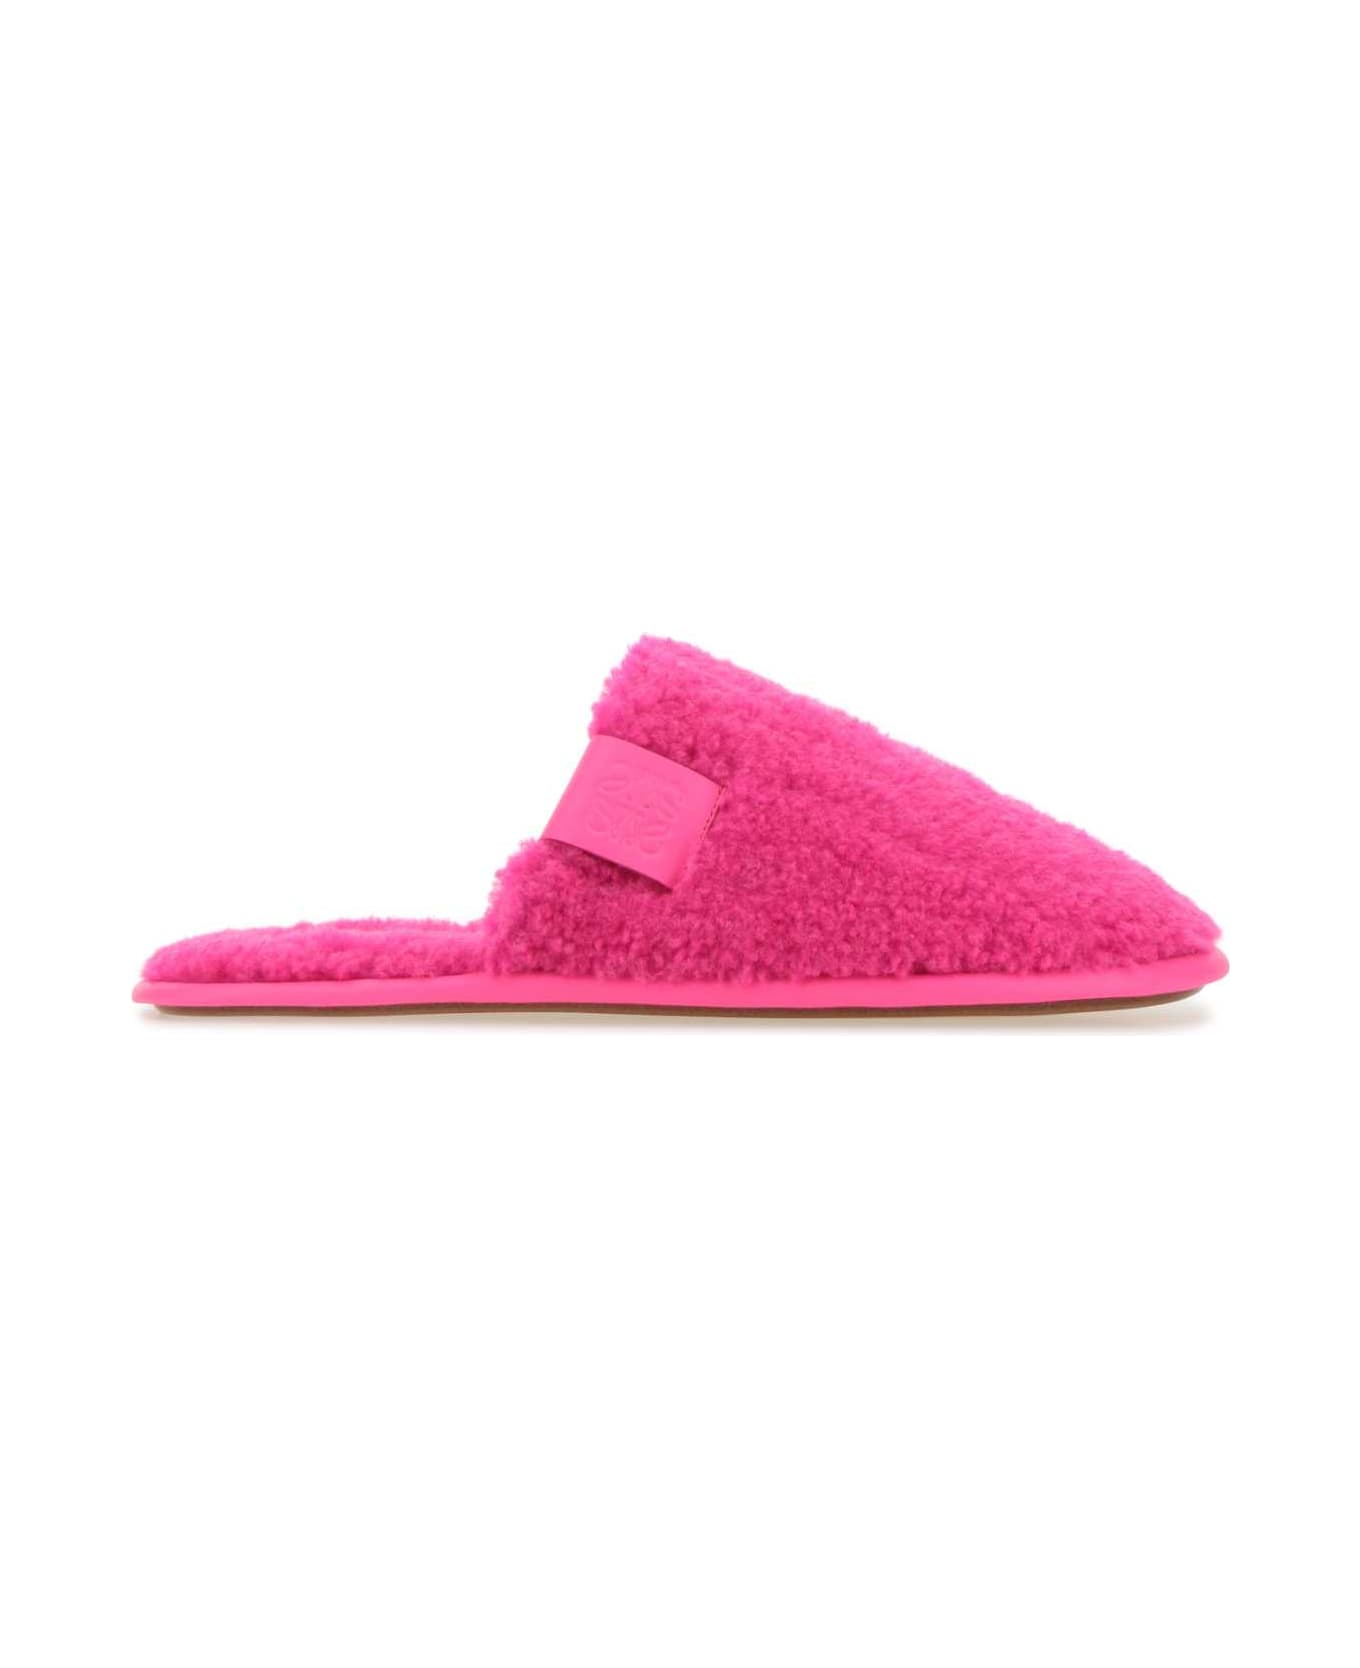 Loewe Fluo Pink Pile Slippers - NEONPINK サンダル